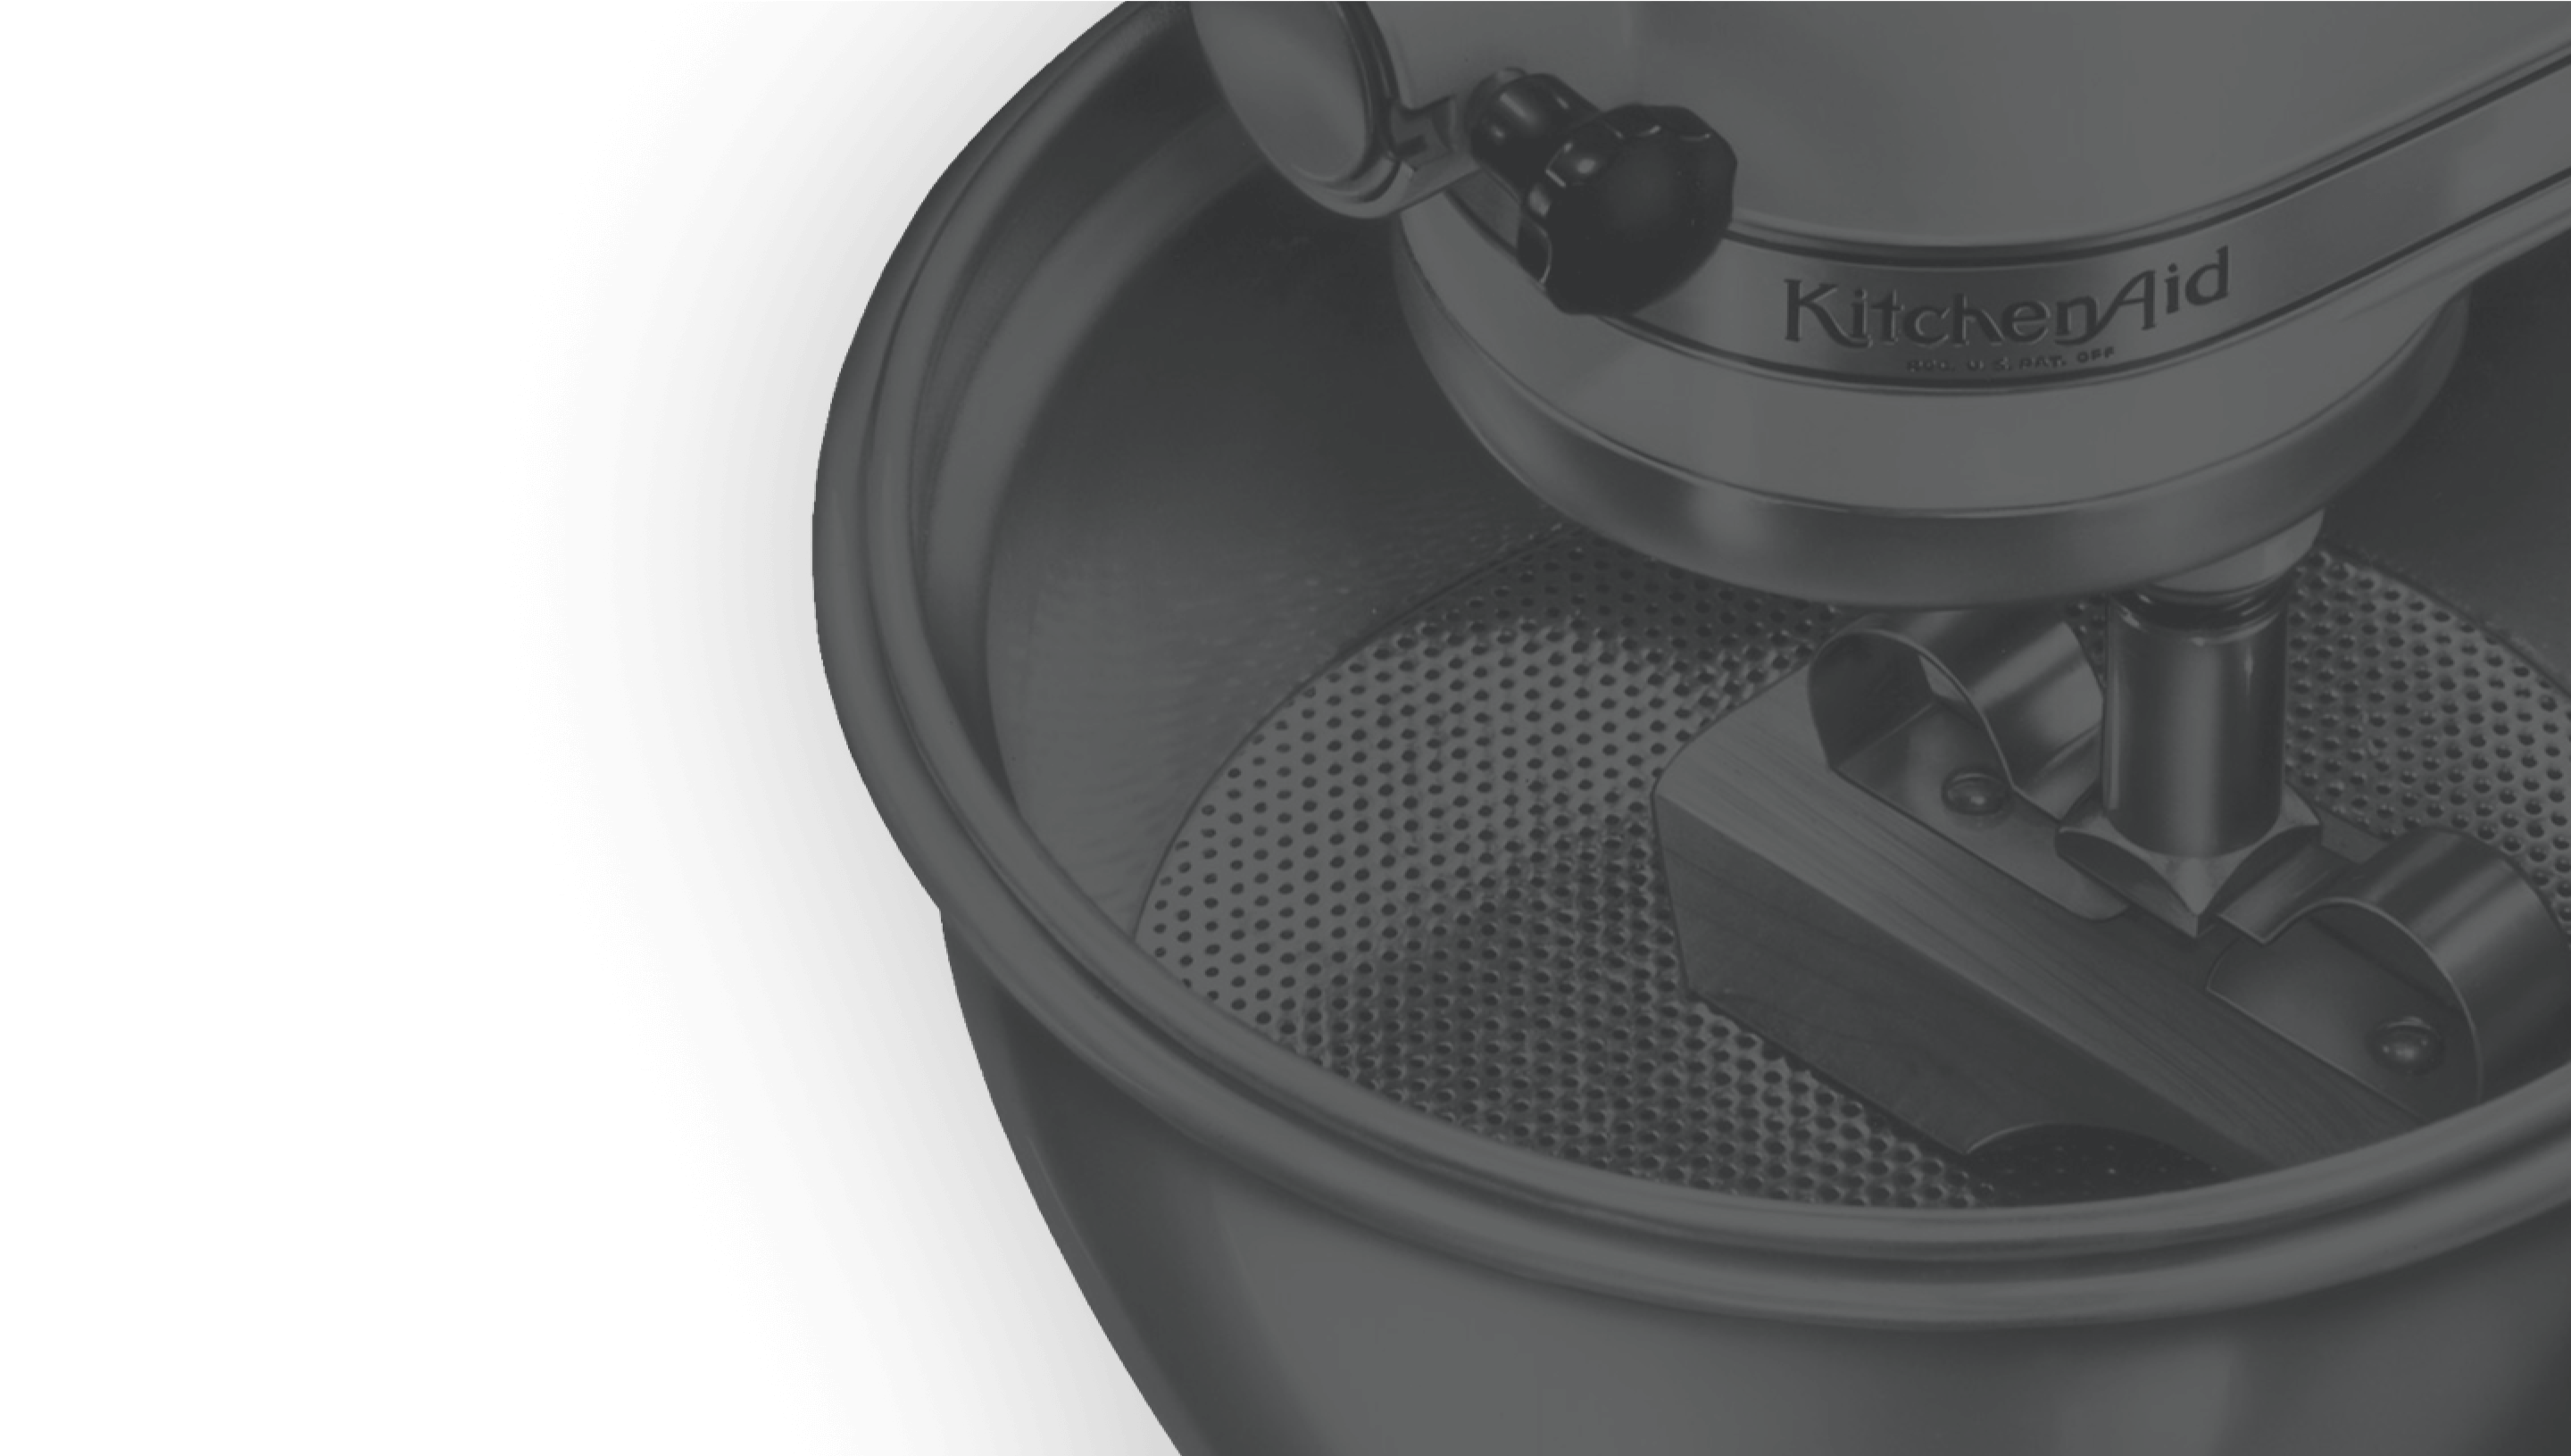 Gvode Ceramic Mixer Attachment Fit all Kitchenaid Mixer Bowl, 4.5-5Q  Tilt-Head Ceramic Bowl for Kitchenaid Mixer, 5 QT Kitchenaid Bowl -  White(does not include kitchenaid stand mixer)